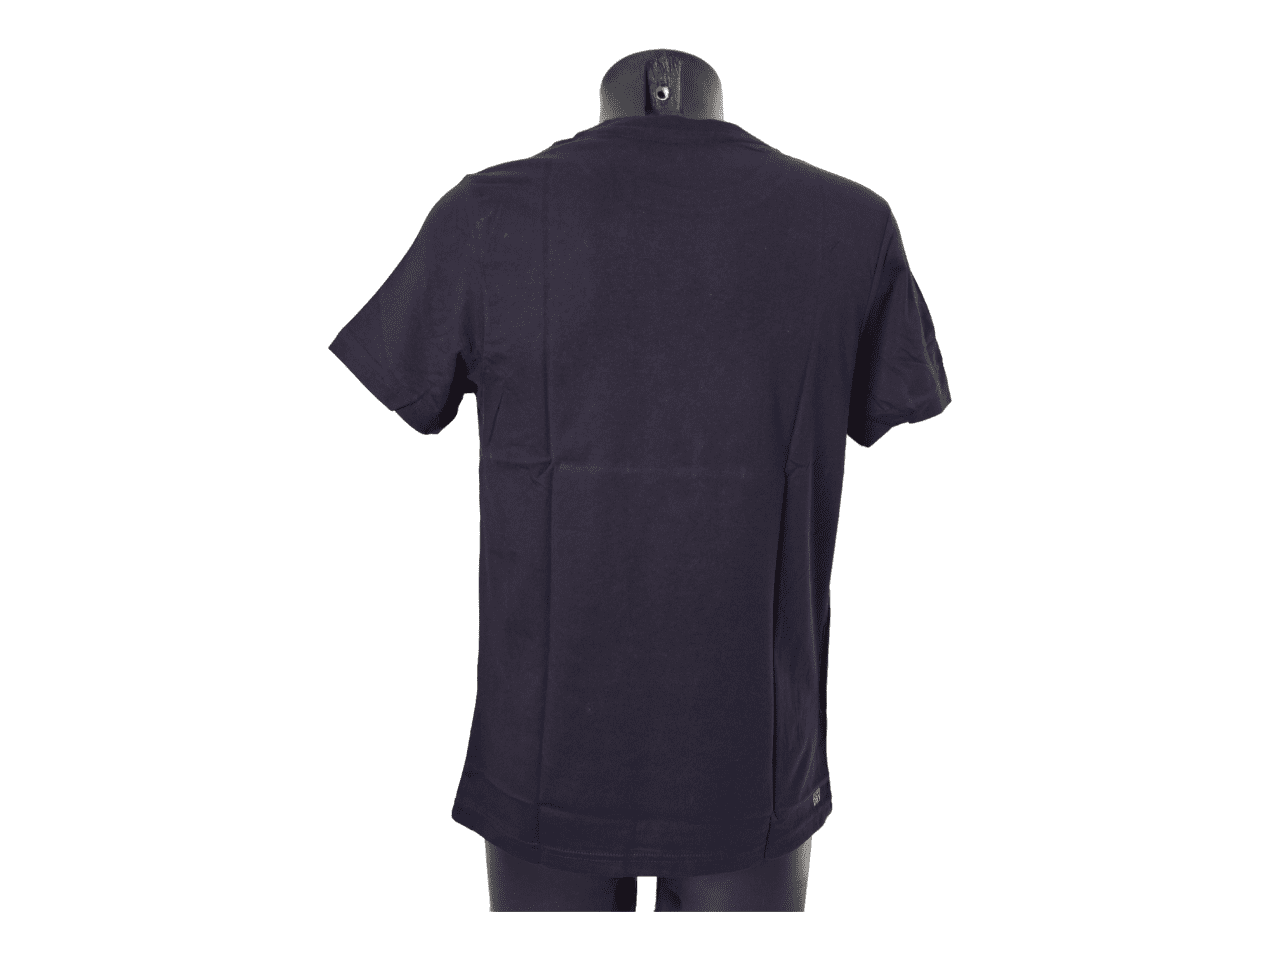 T-Shirt LACOSTE bleu marine gros logo devant taille 5